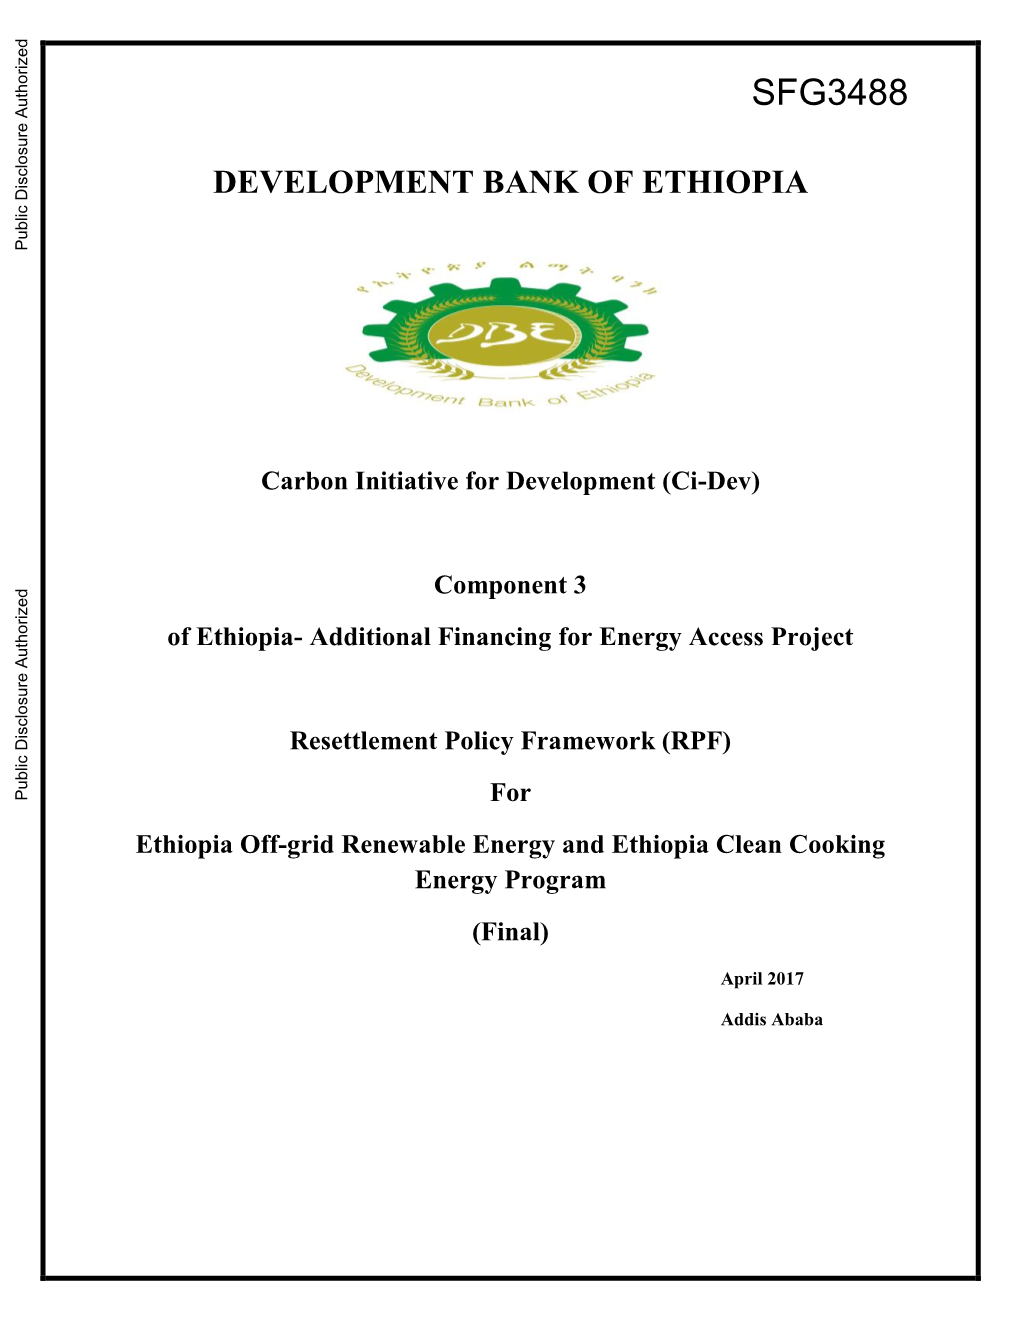 DEVELOPMENT BANK of ETHIOPIA Public Disclosure Authorized